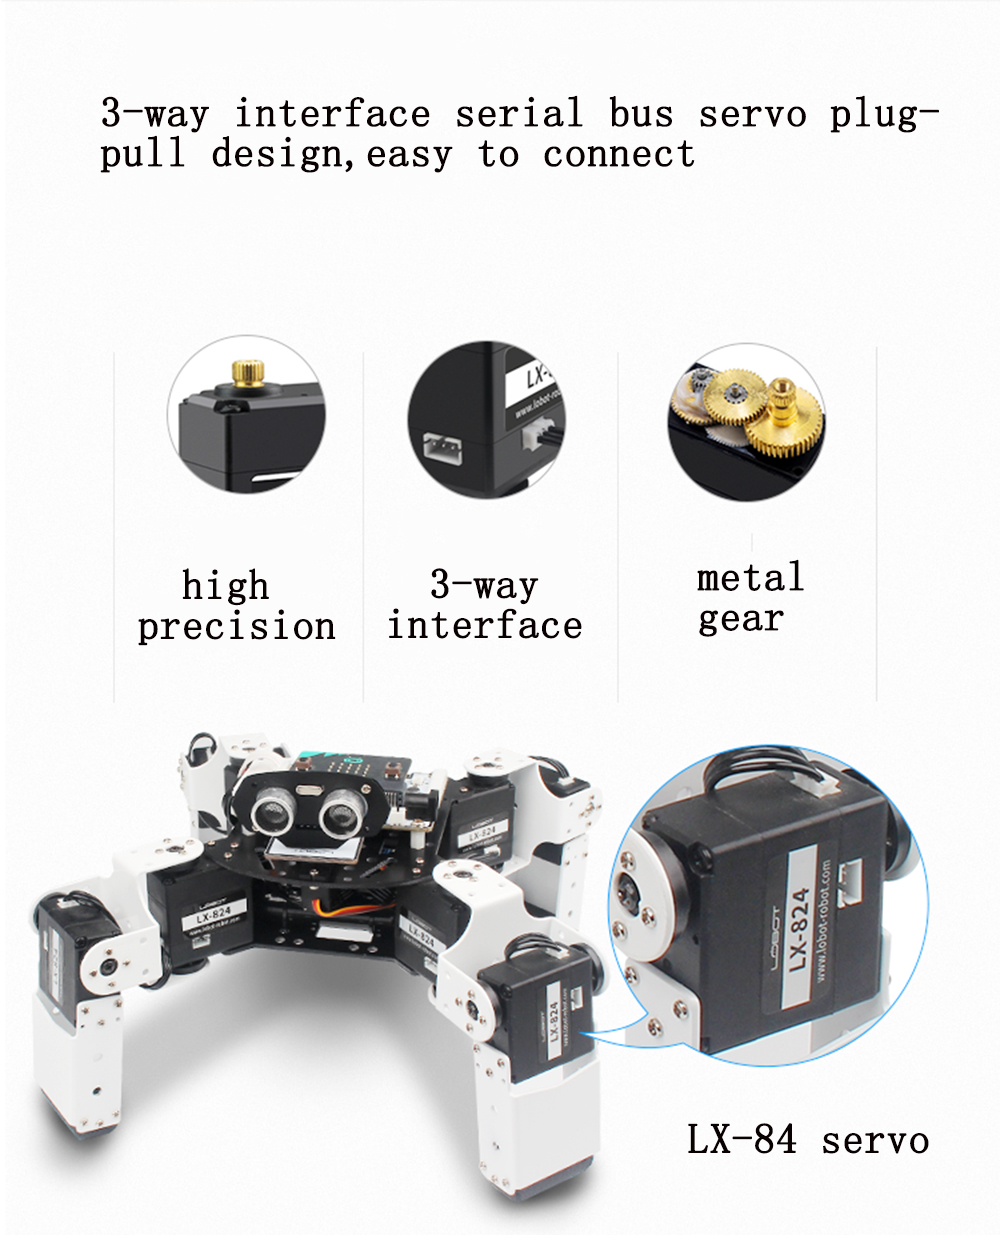 LOBOT-Alienbot-Microbit-Programmable-Multifunctional-PCAPP-Control--Smart-RC-Robot-1476889-11